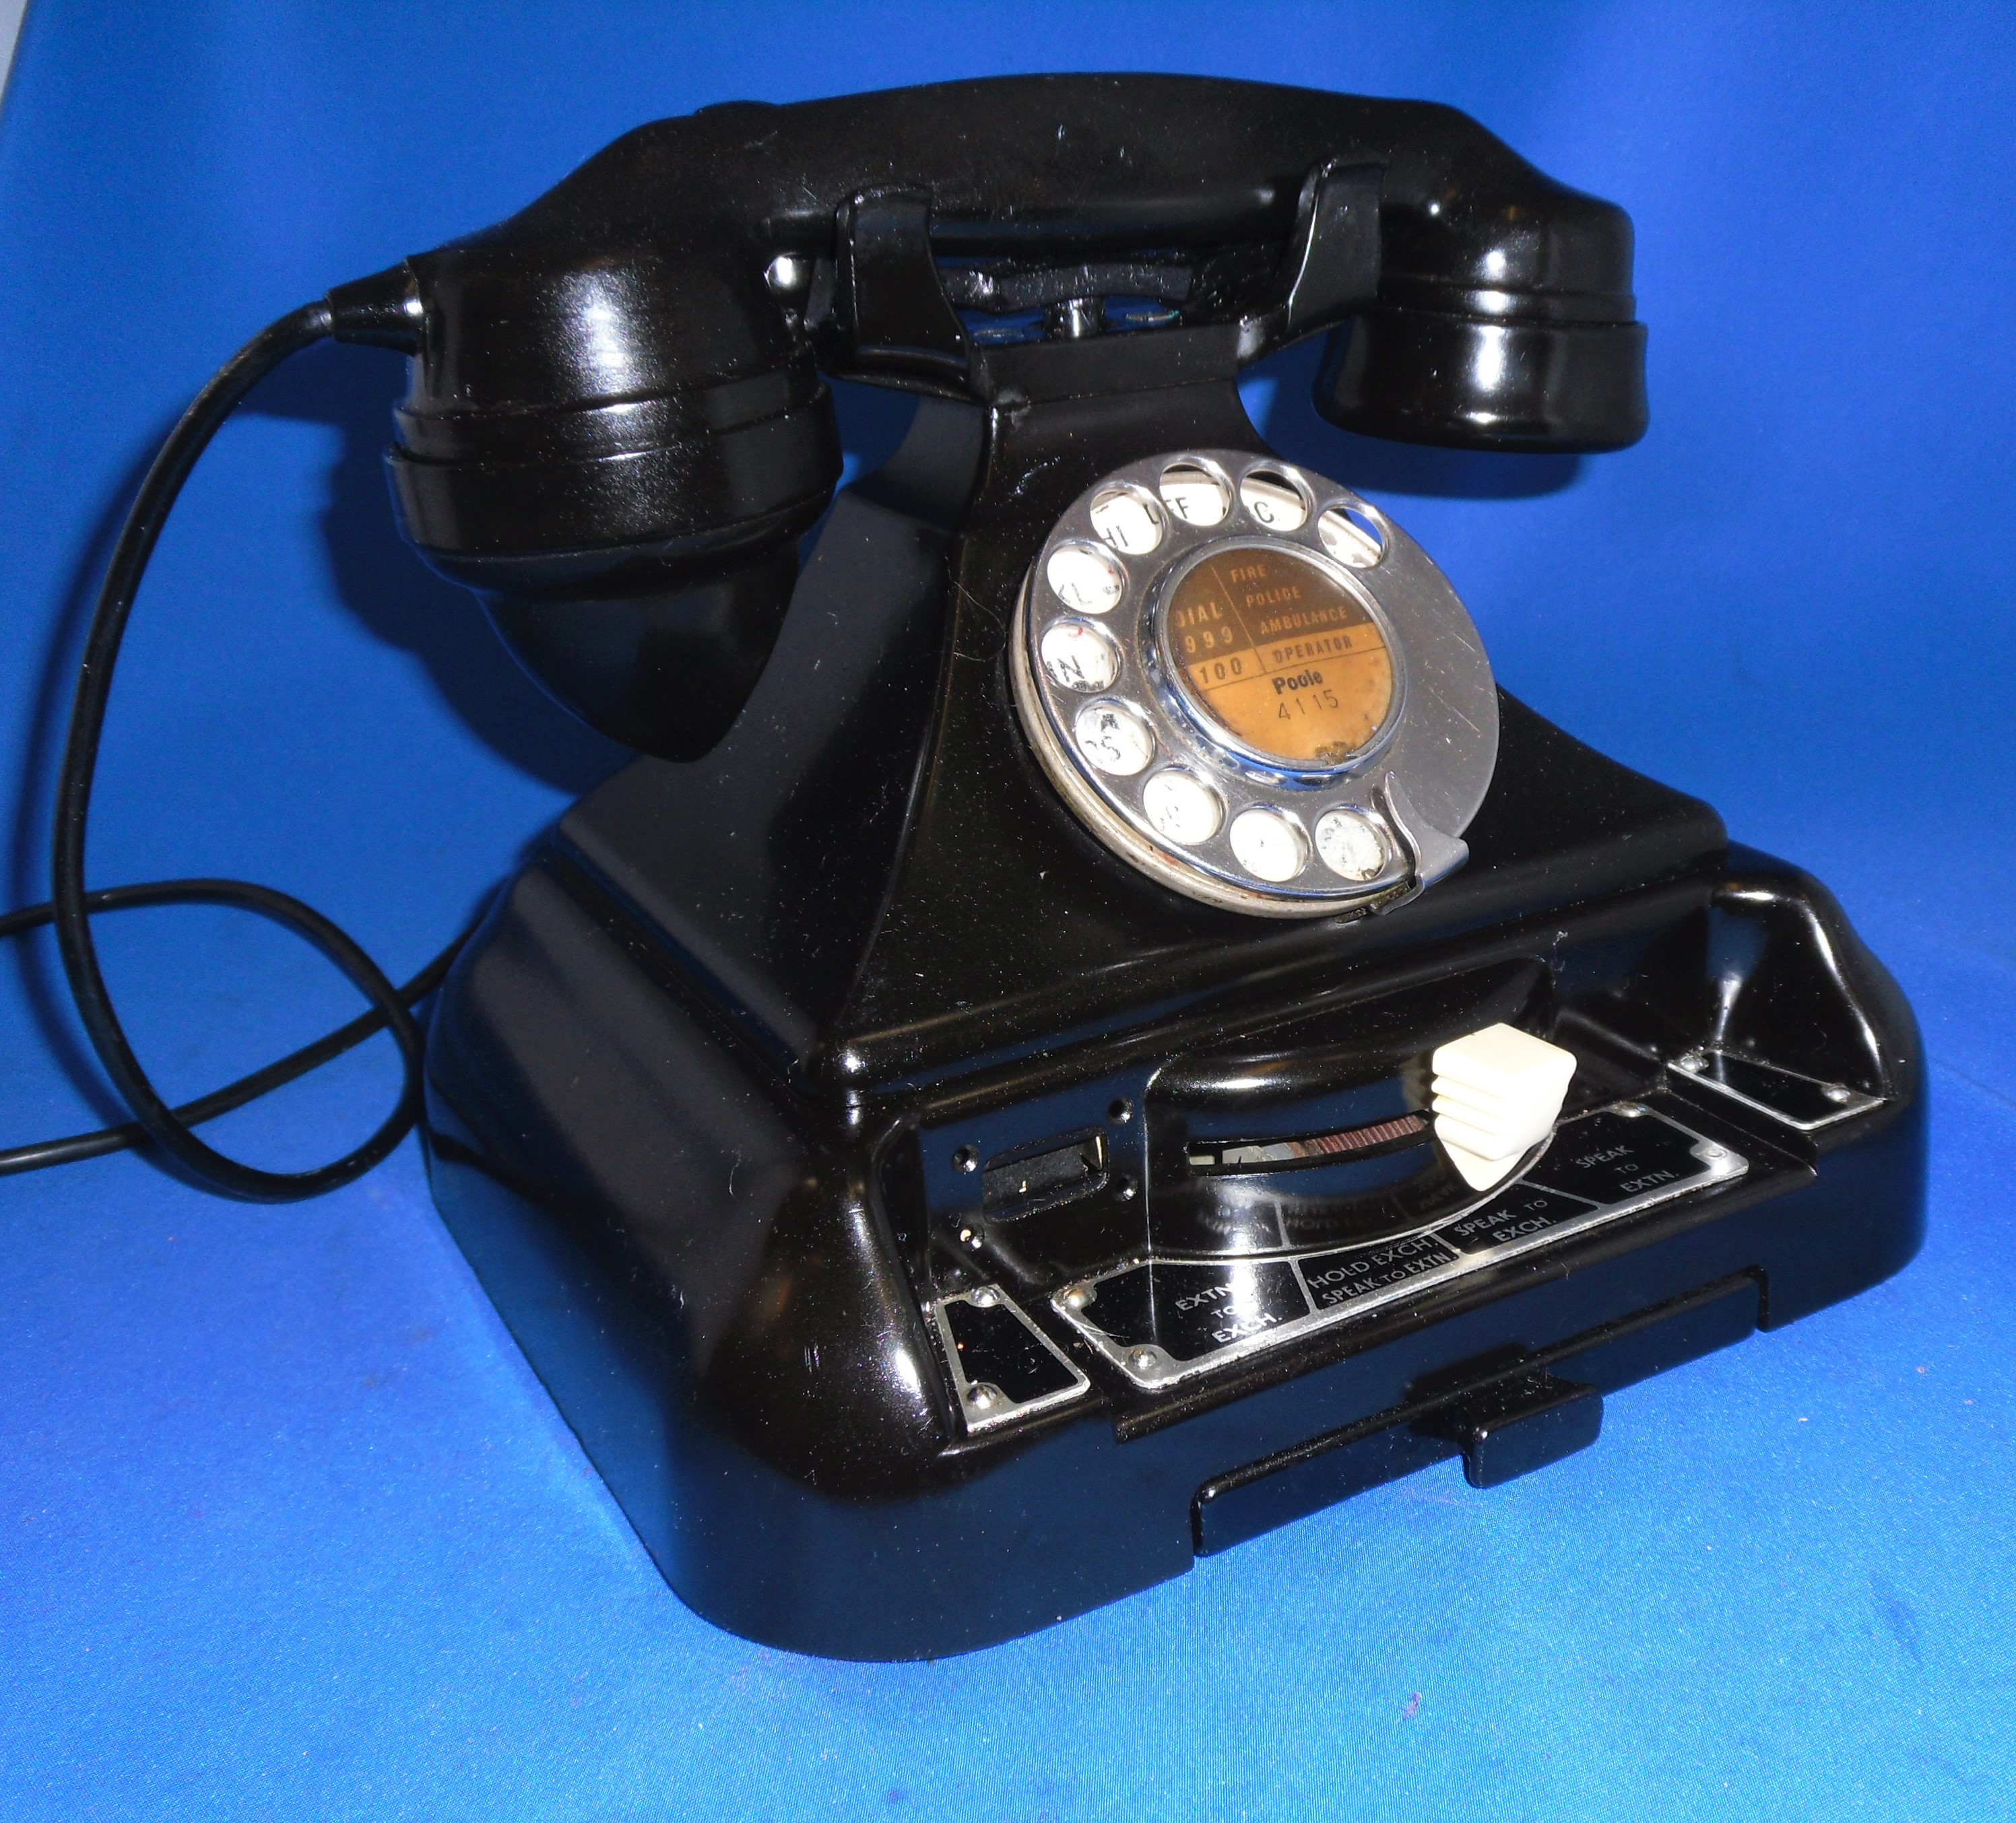 1930s Telephone Pyramid GPO King with Intercom Switching 232 Series Bakelite Telephone With Interco